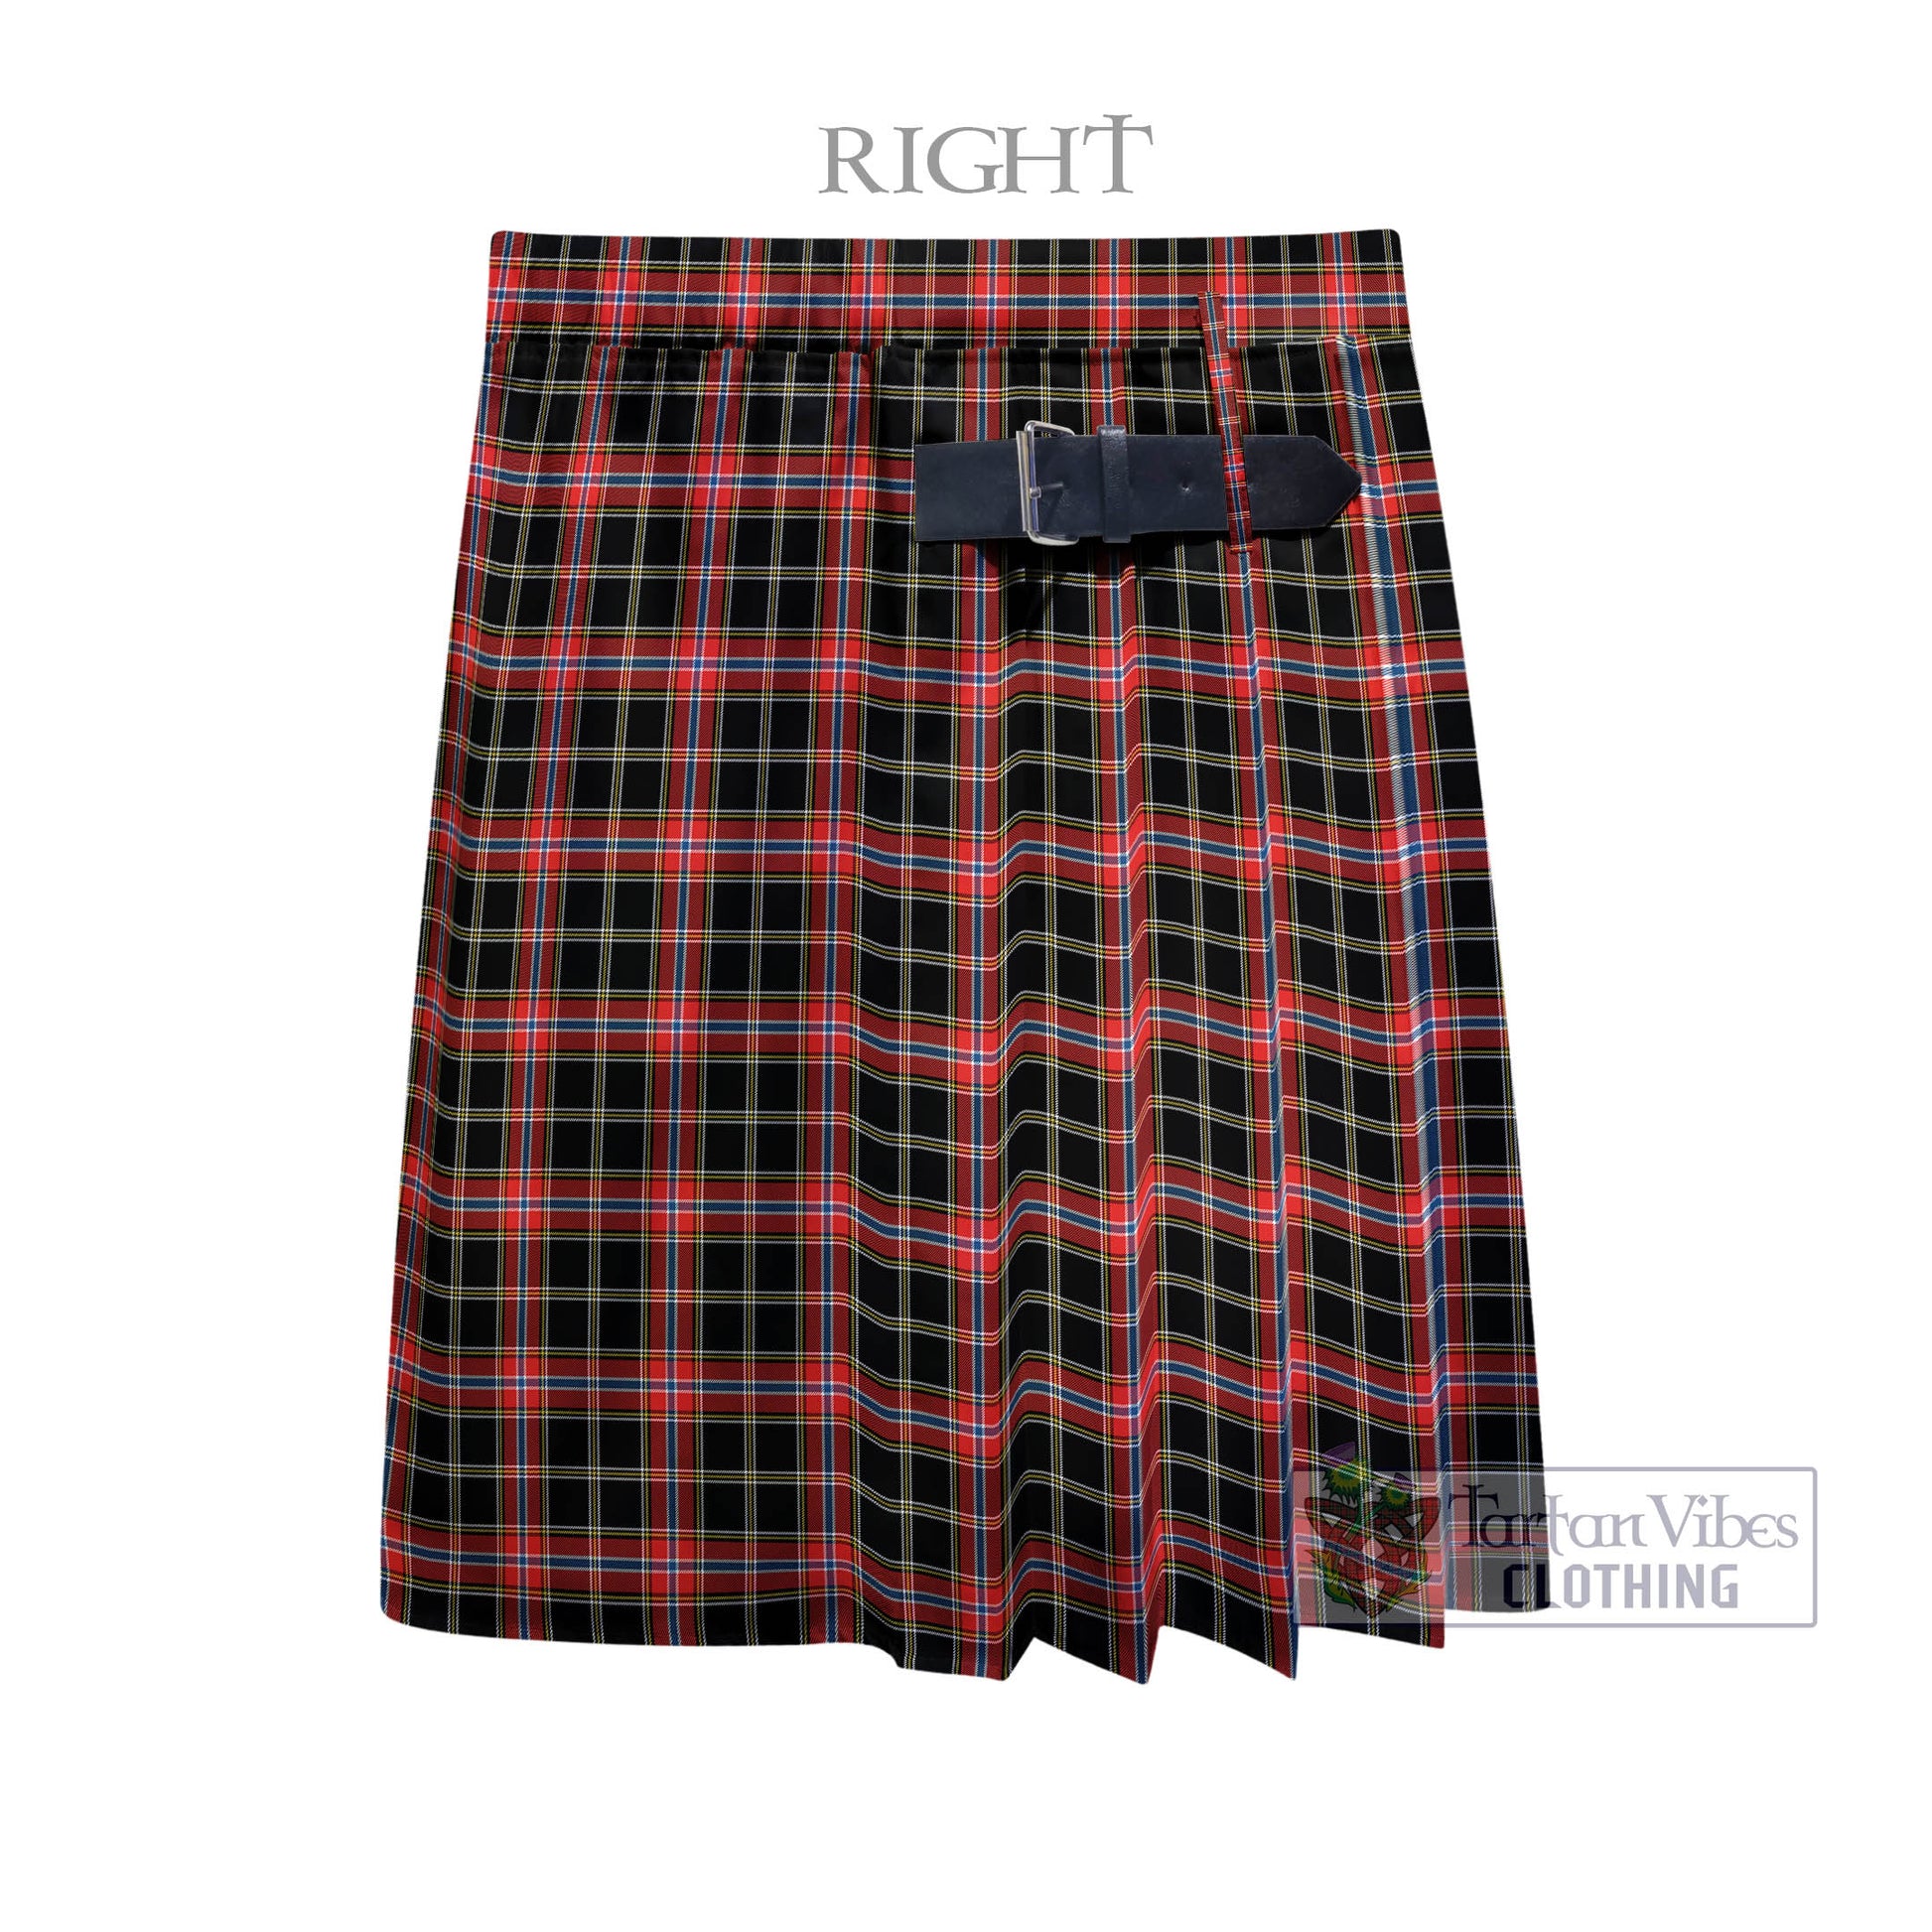 Tartan Vibes Clothing Norwegian Night Tartan Men's Pleated Skirt - Fashion Casual Retro Scottish Style